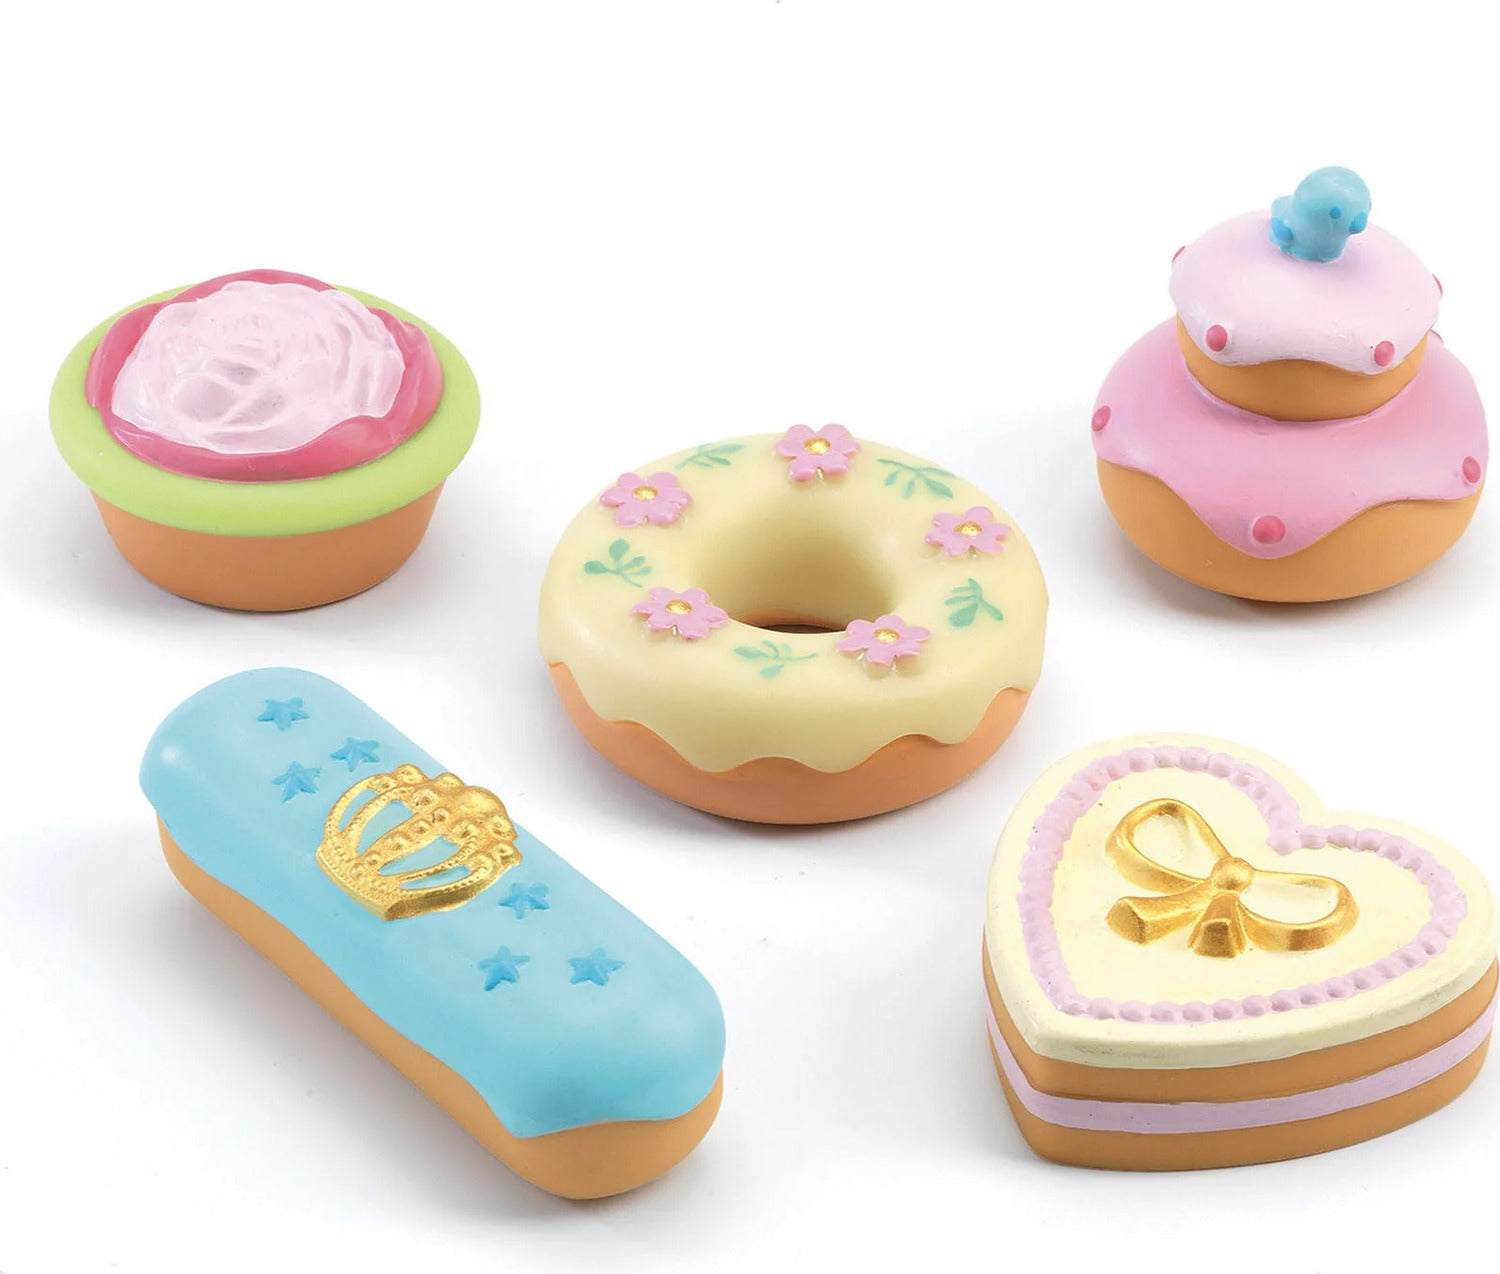 Princesses' Cakes Play Set